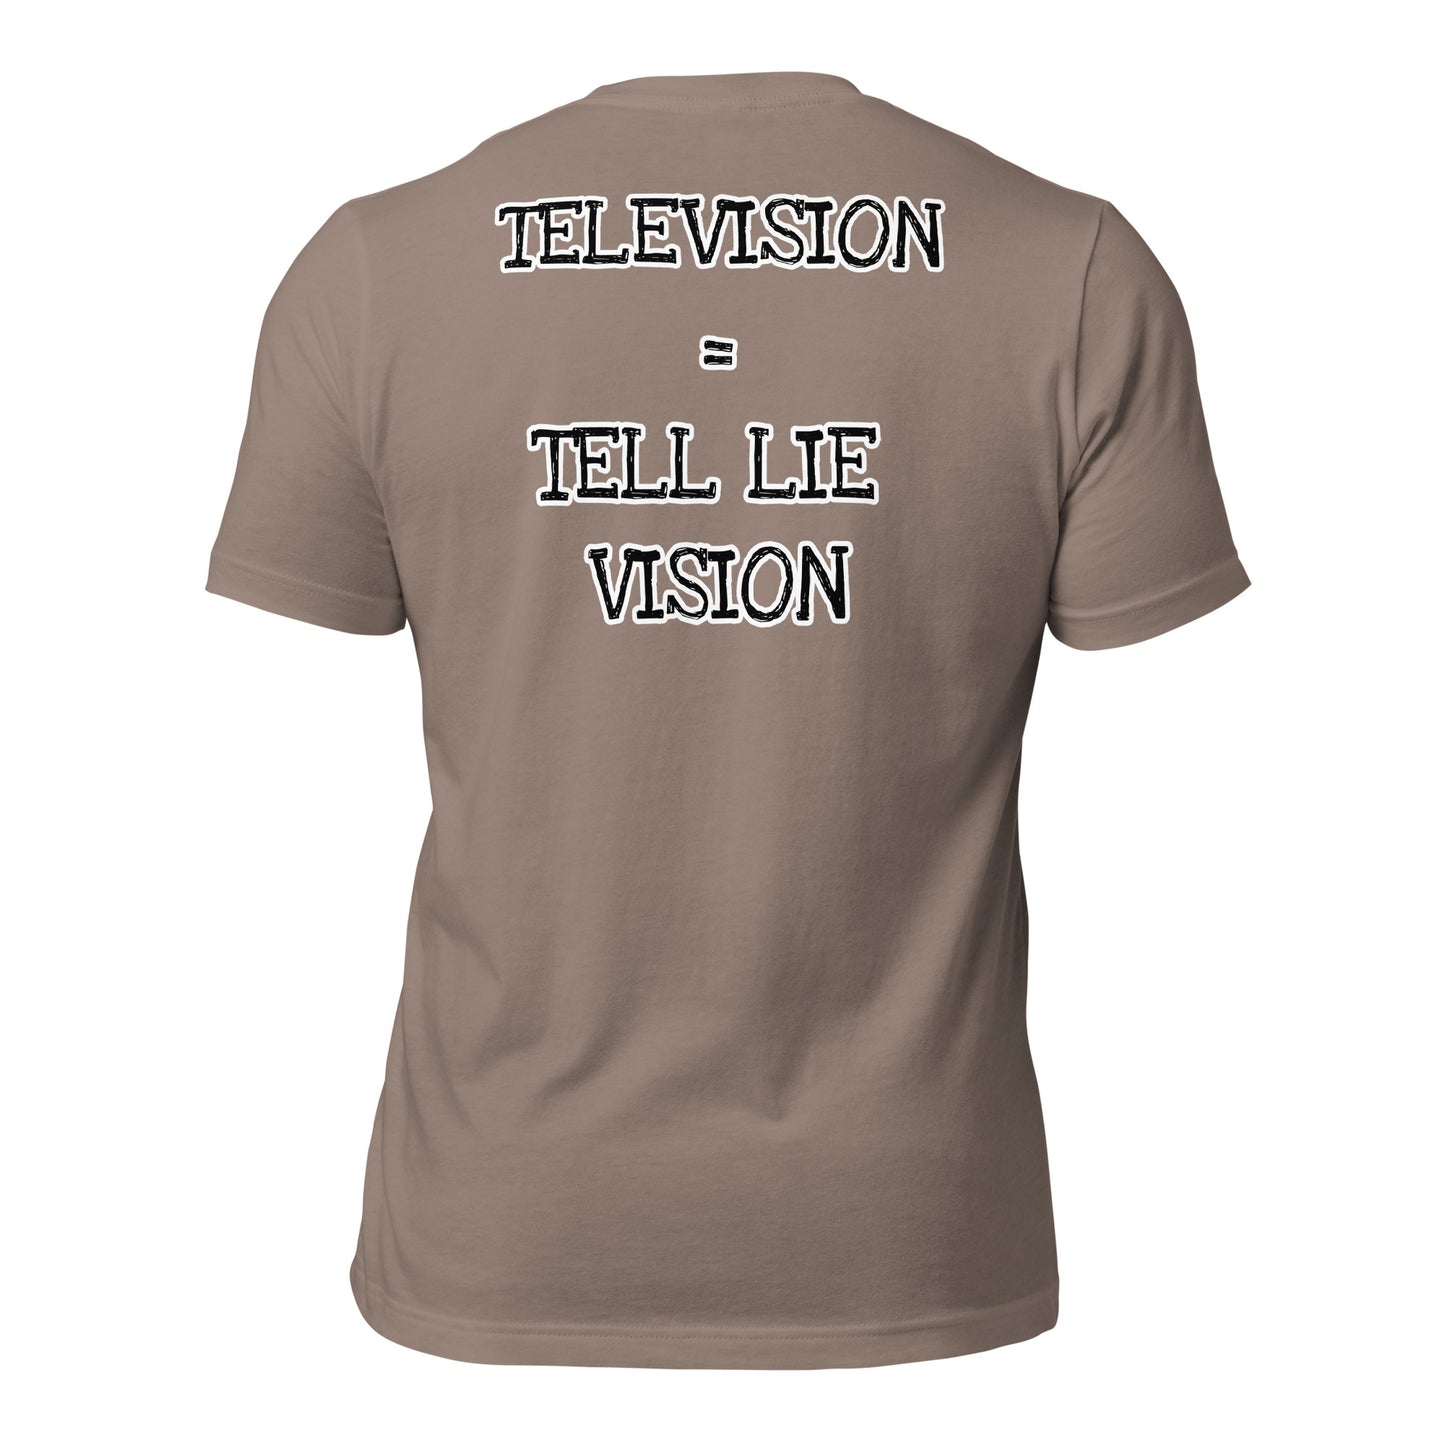 TELEVISION = TELL LIE VISION